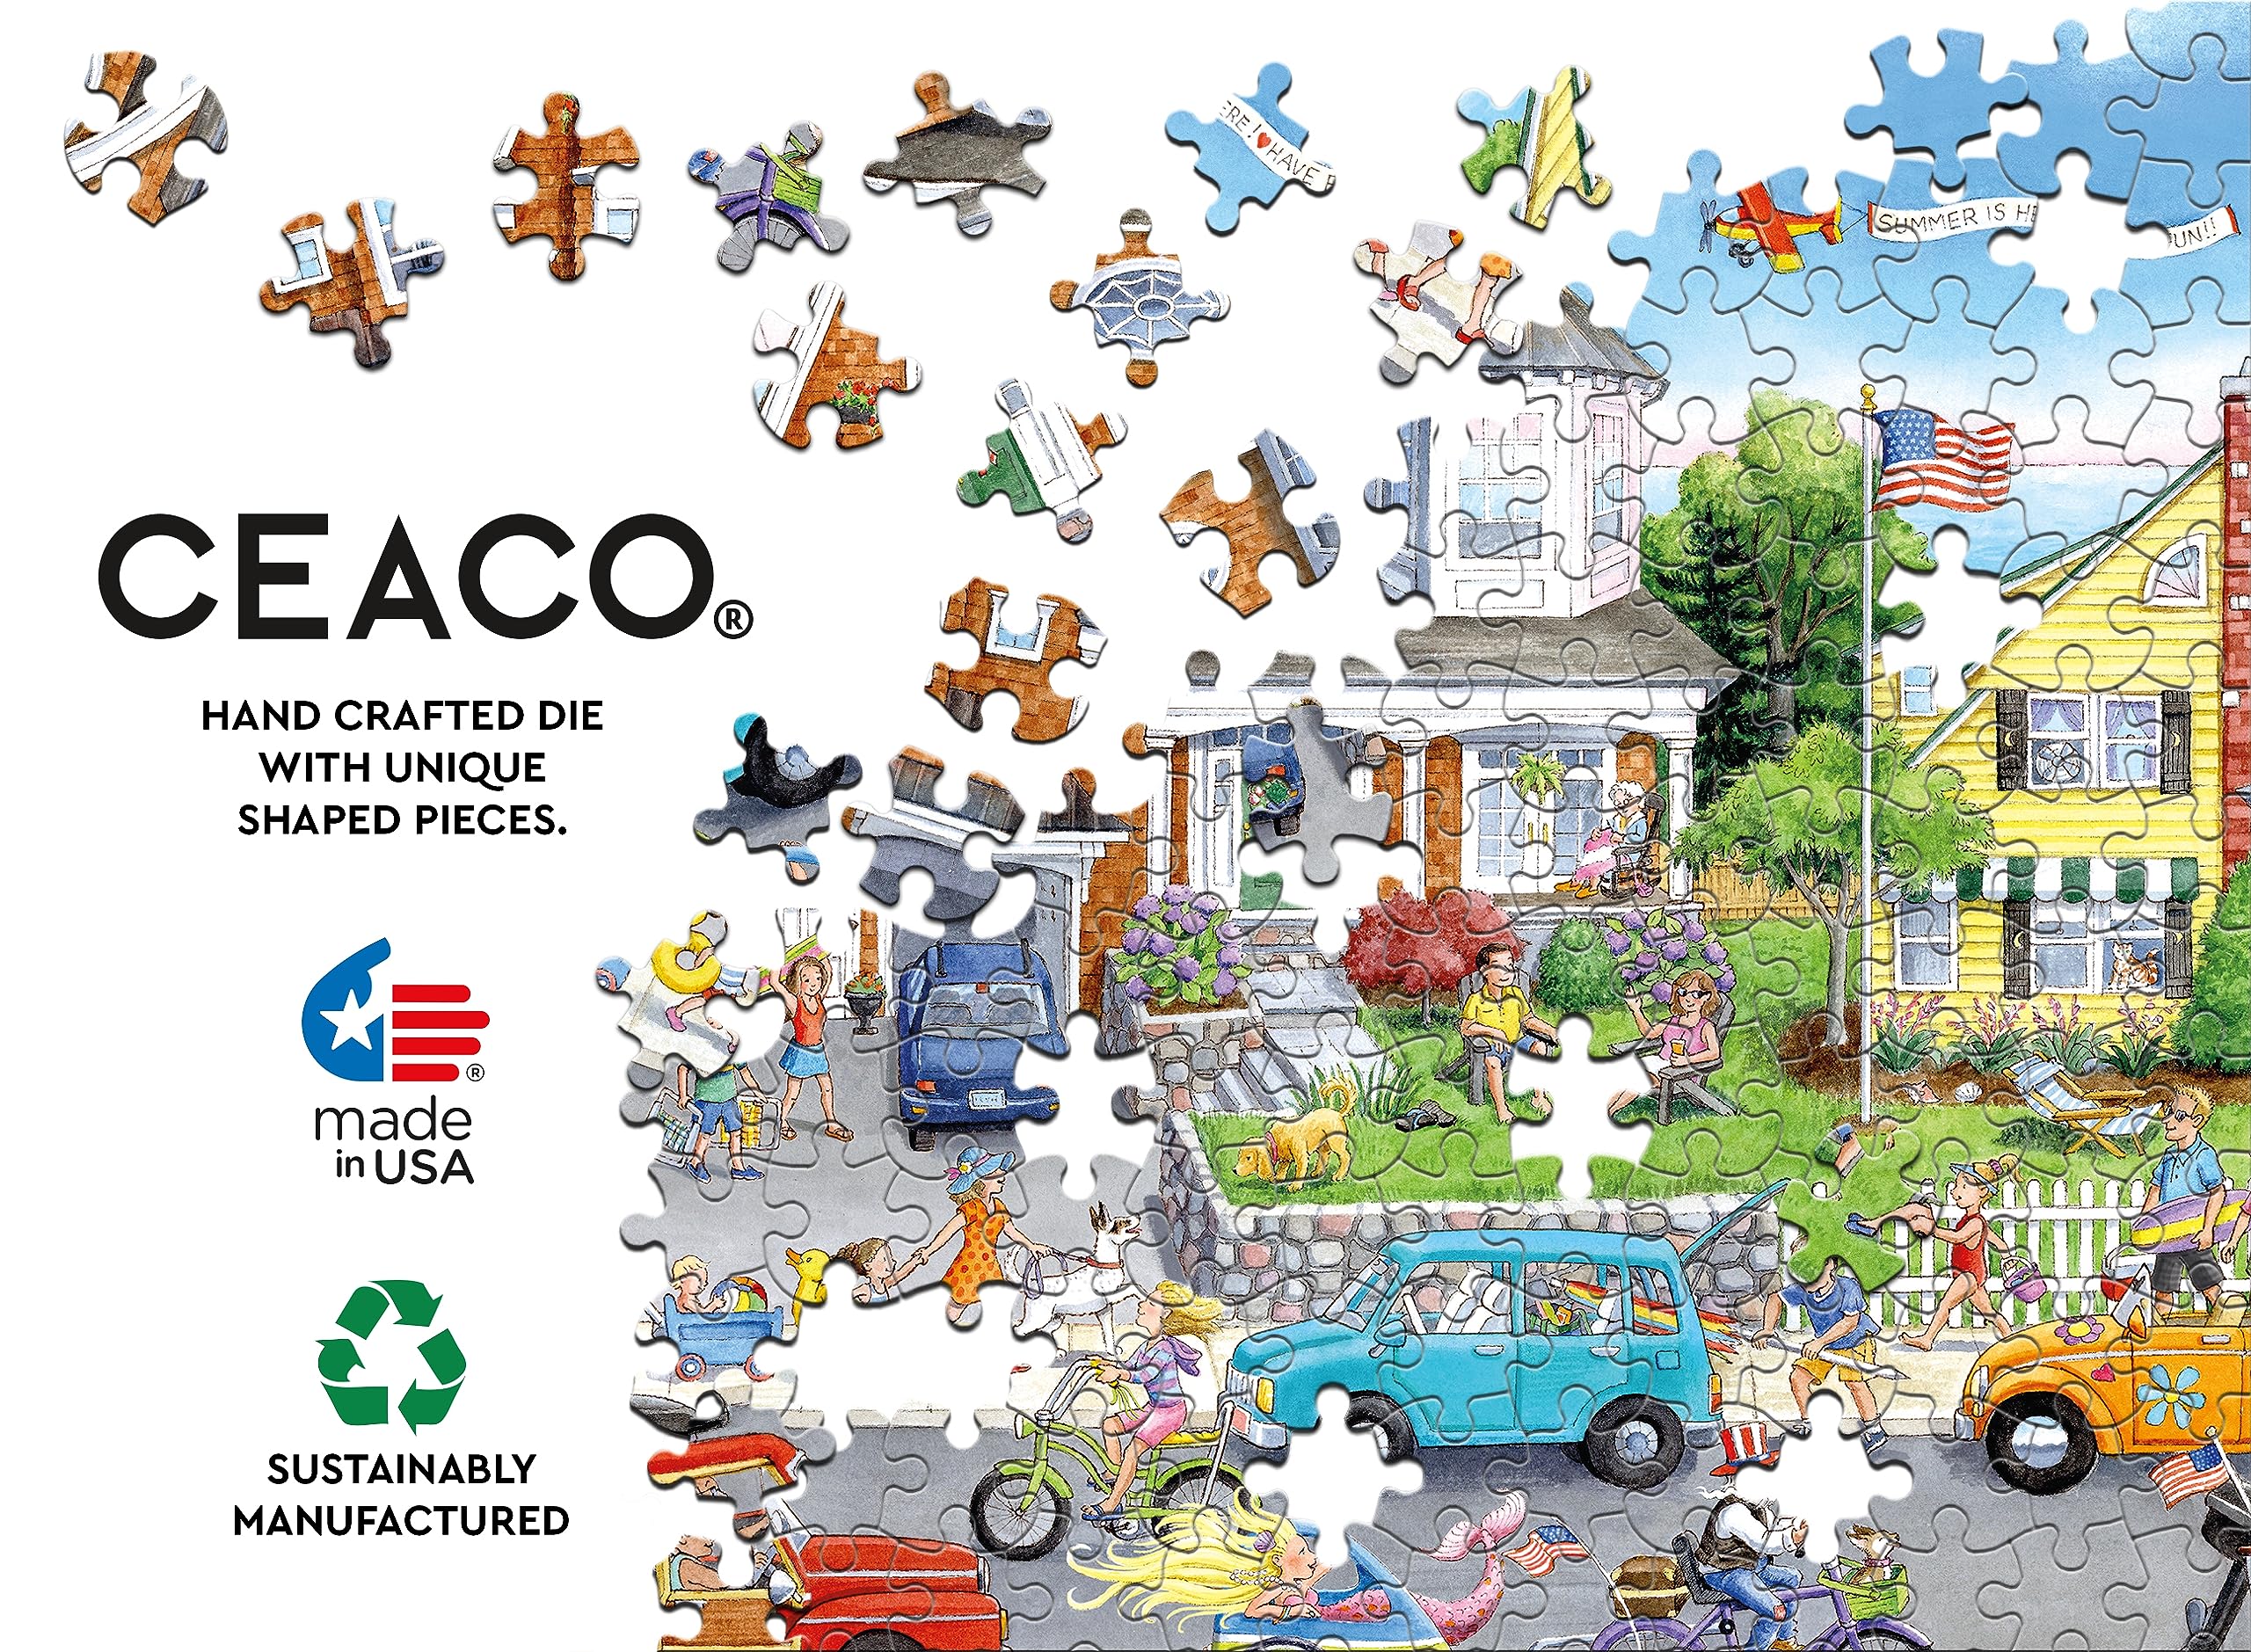 Ceaco - Summer by The Beach - 300 Piece Jigsaw Puzzle